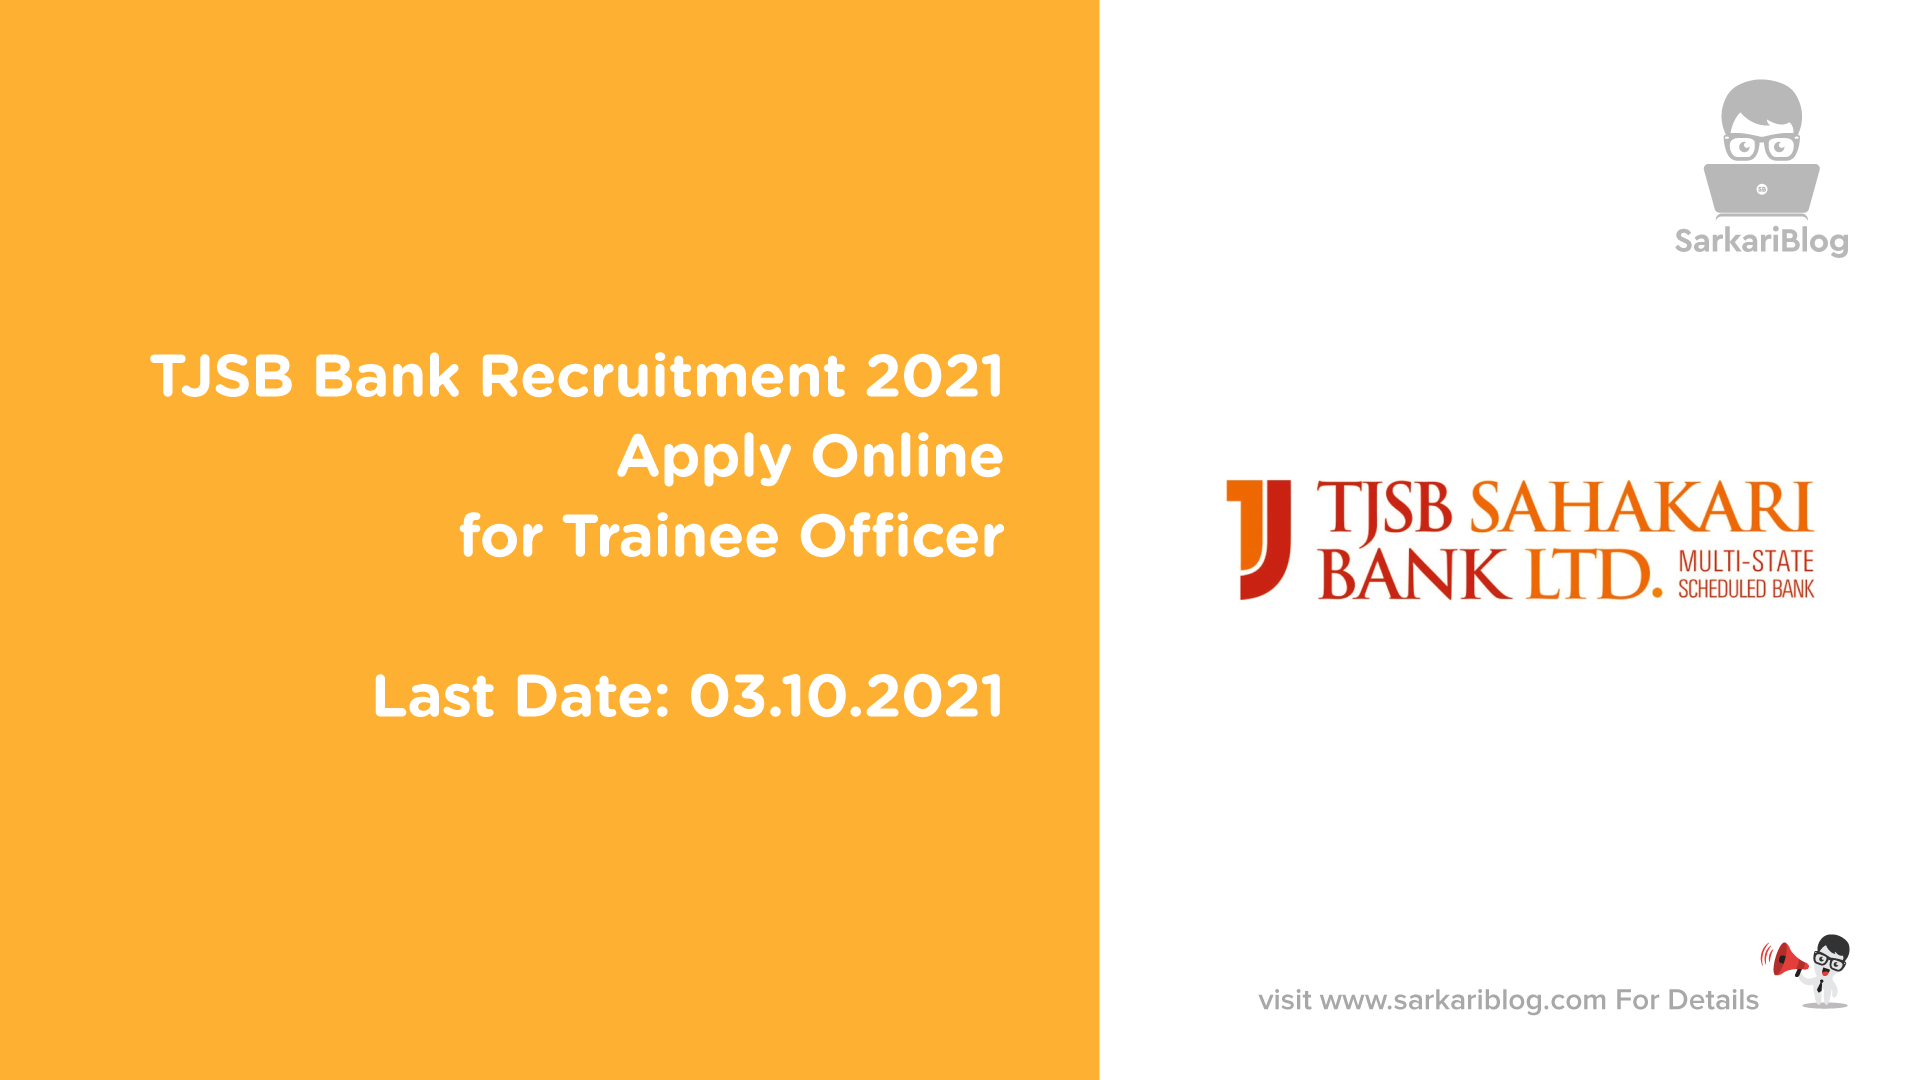 TJSB Bank Recruitment 2021 – Apply Online for Trainee Officer @ tjsbbank.co.in